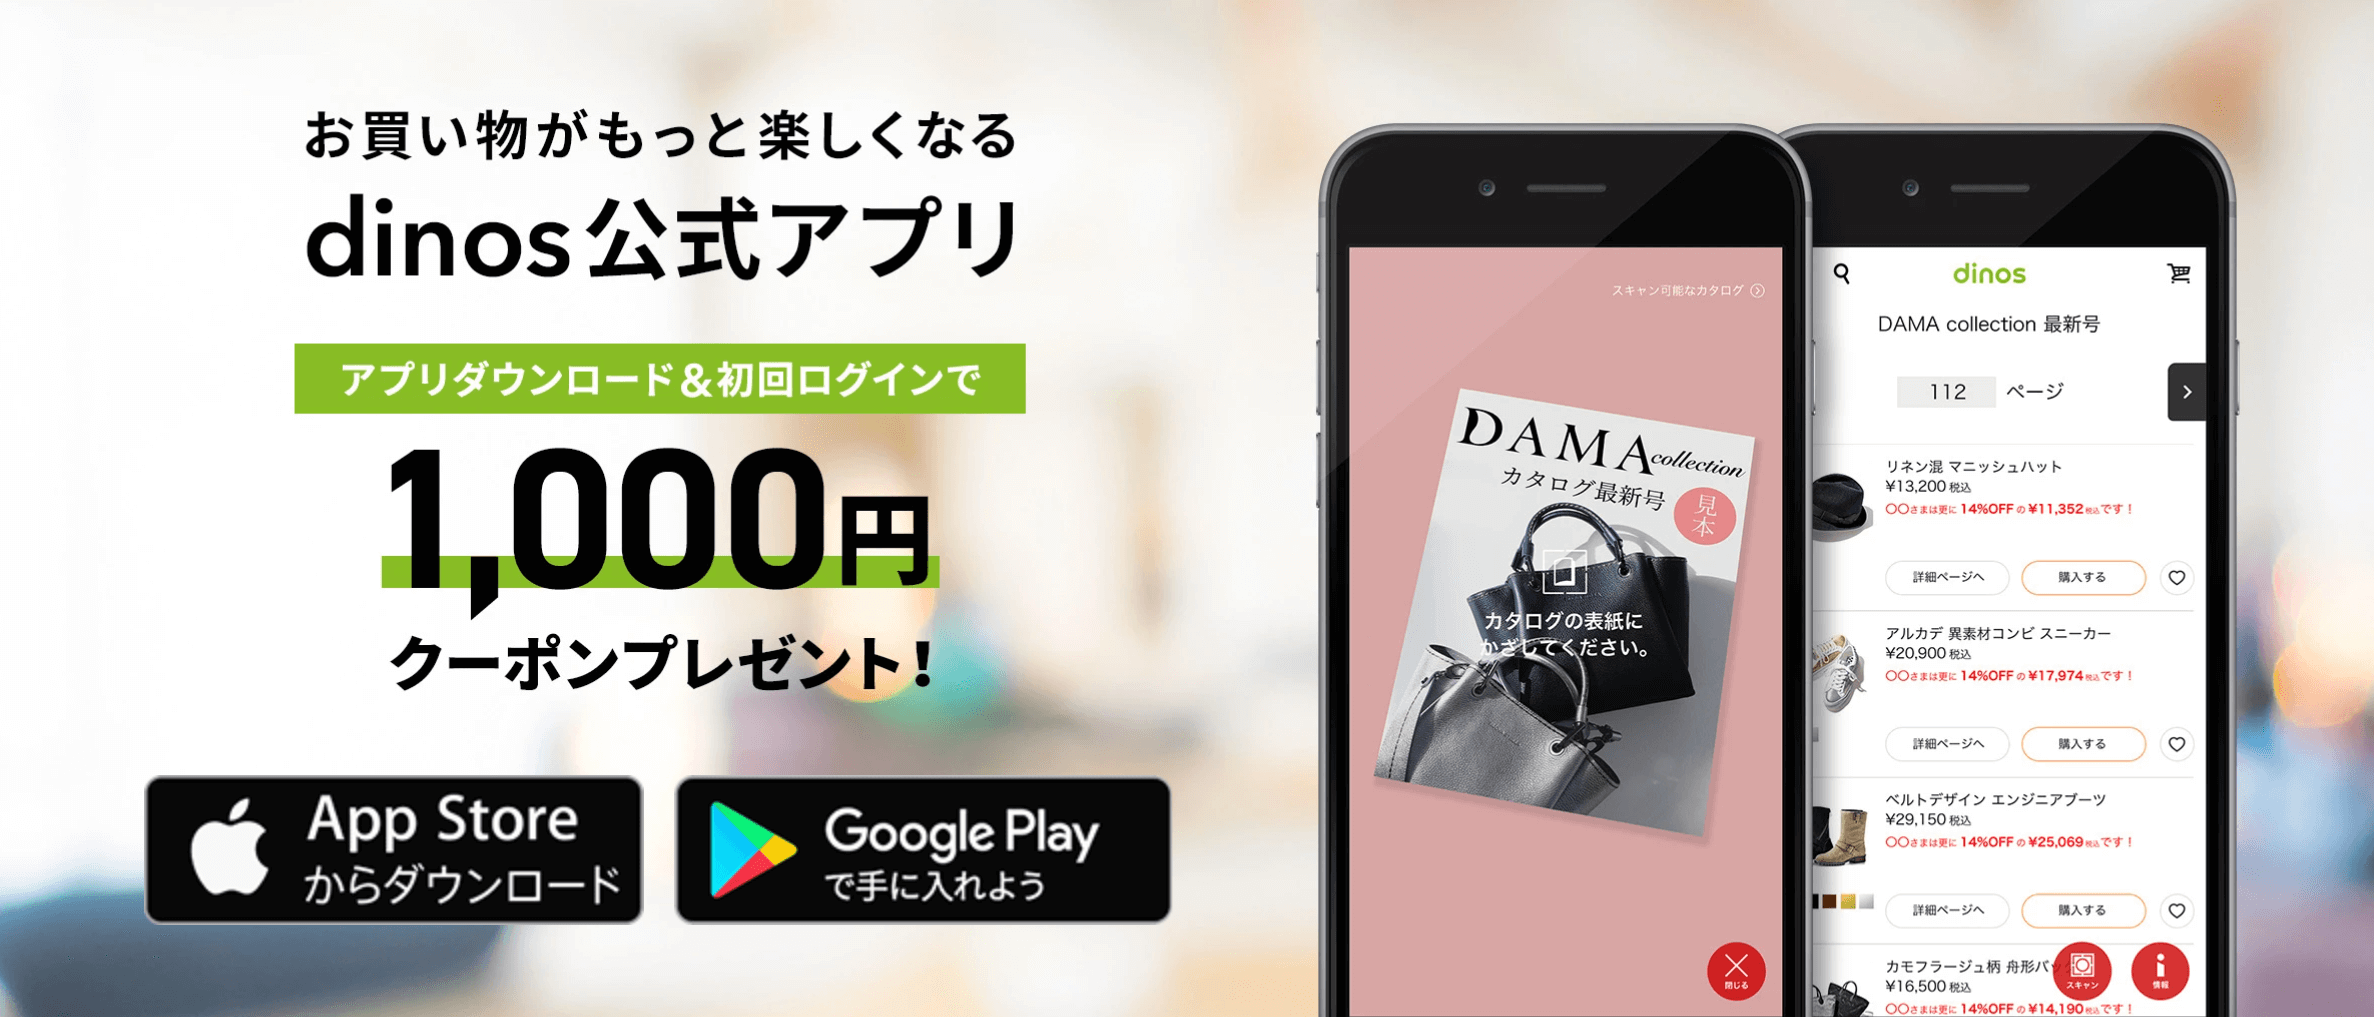 dinos(ディノス)【公式アプリ限定】クーポン1000円分【ダウンロード&初回ログイン】